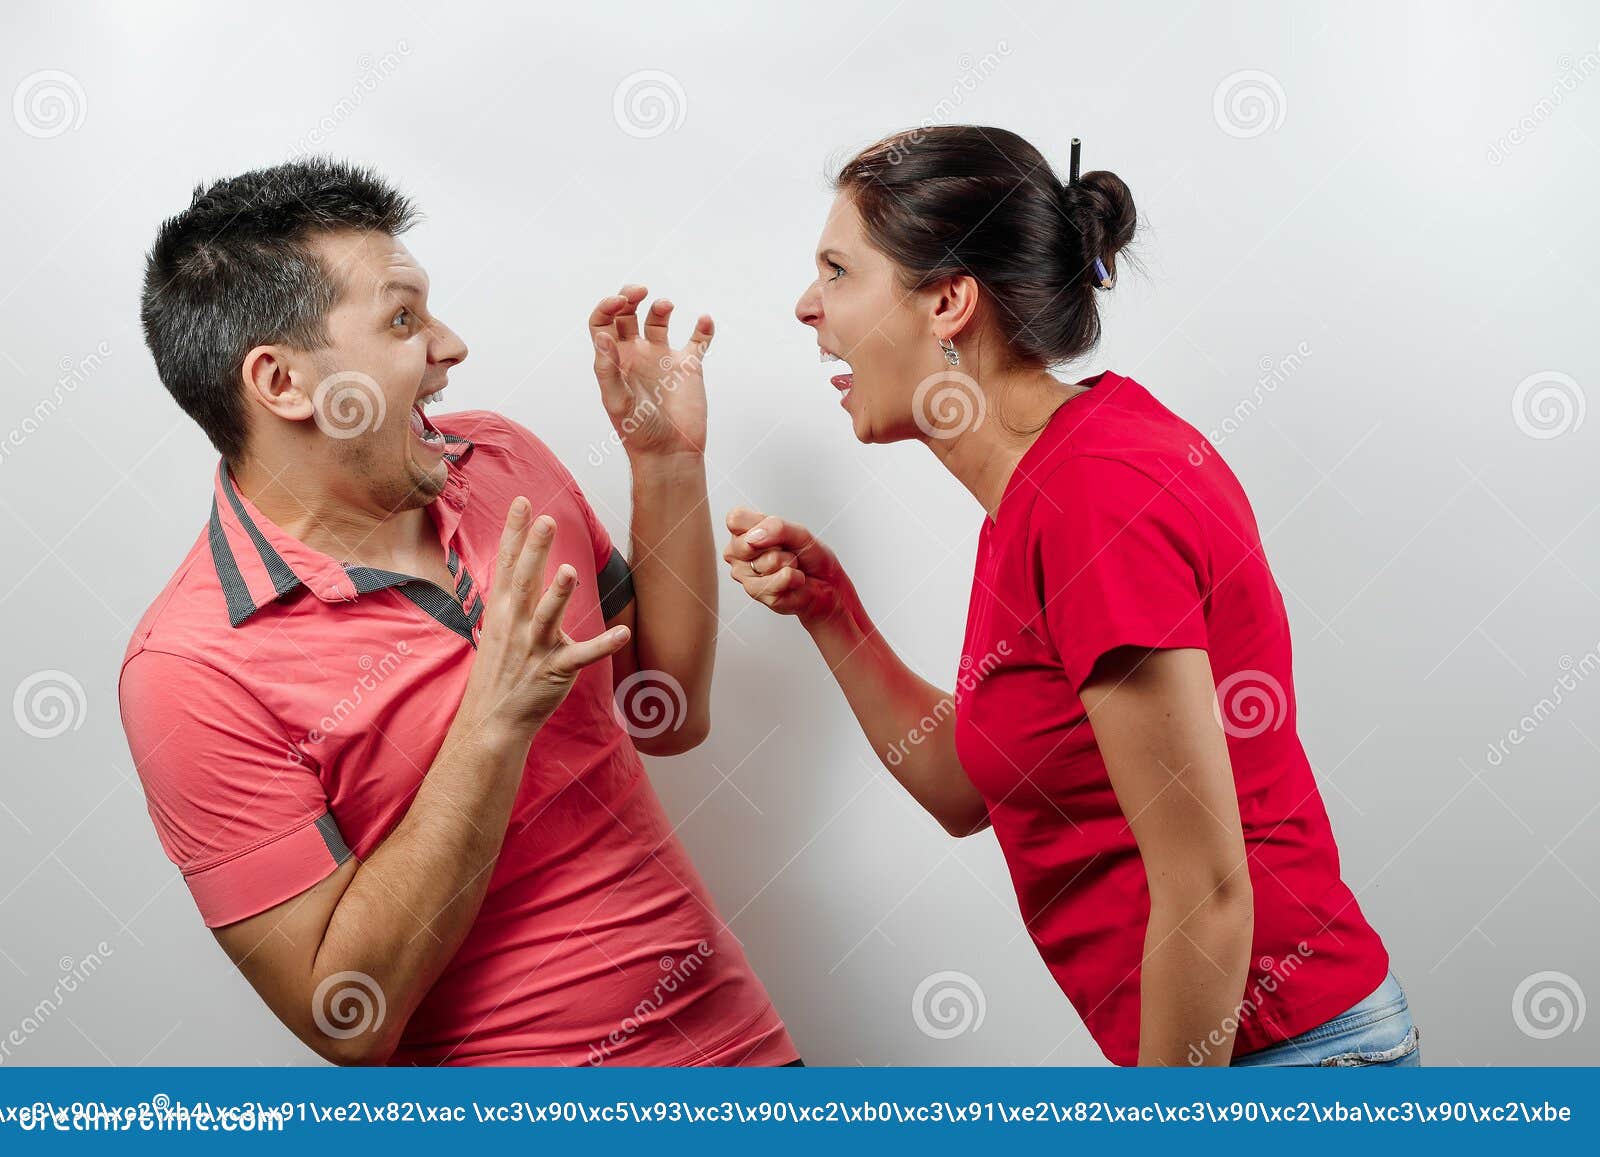 Женщина кричит на мужа. Жена ругается. Ссора картинки. Жена кричит на мужа. Жена ругаться будет